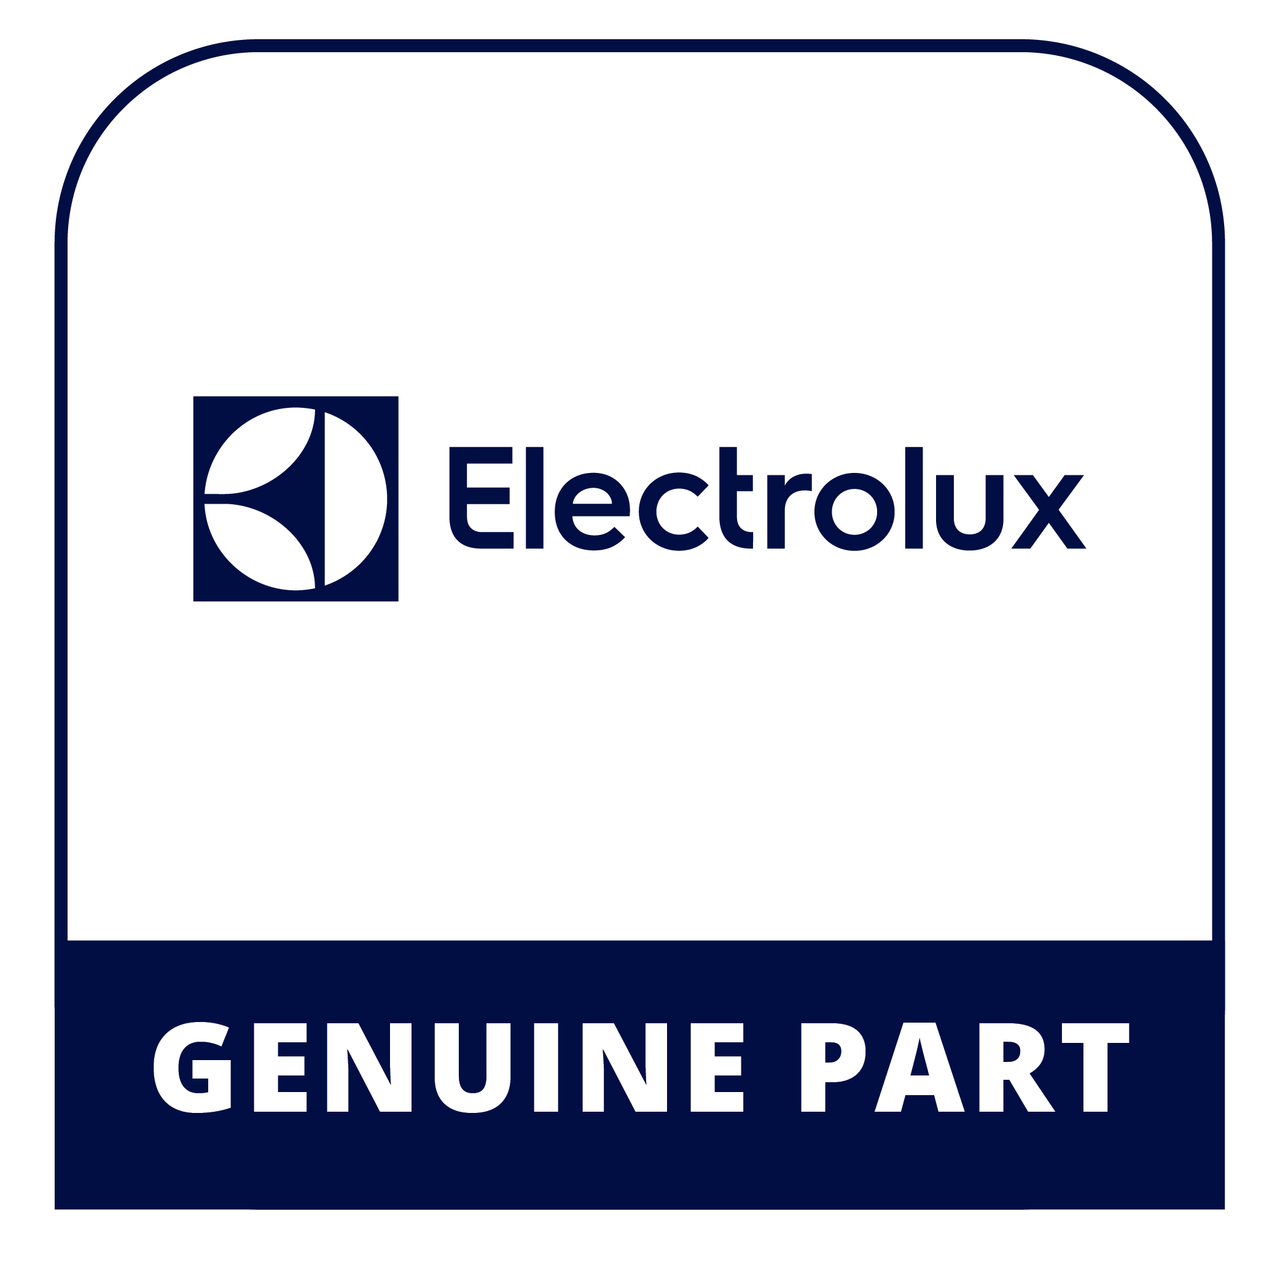 Frigidaire - Electrolux 5304500599 Trim - Genuine Electrolux Part